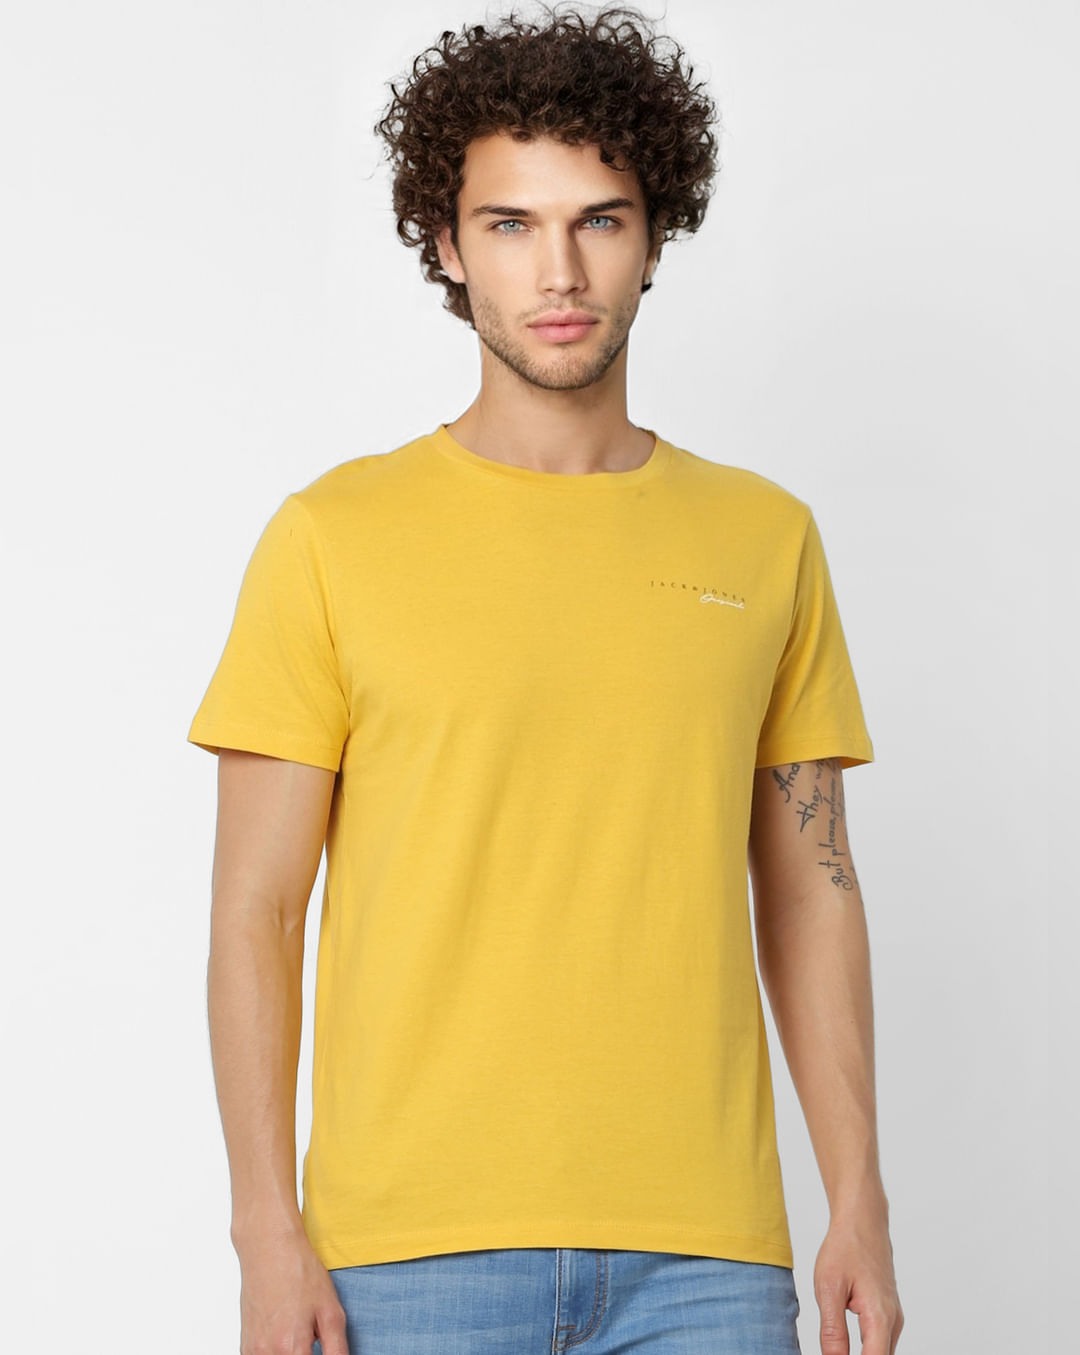 Buy Mustard Yellow Crew Neck T-shirt for Men